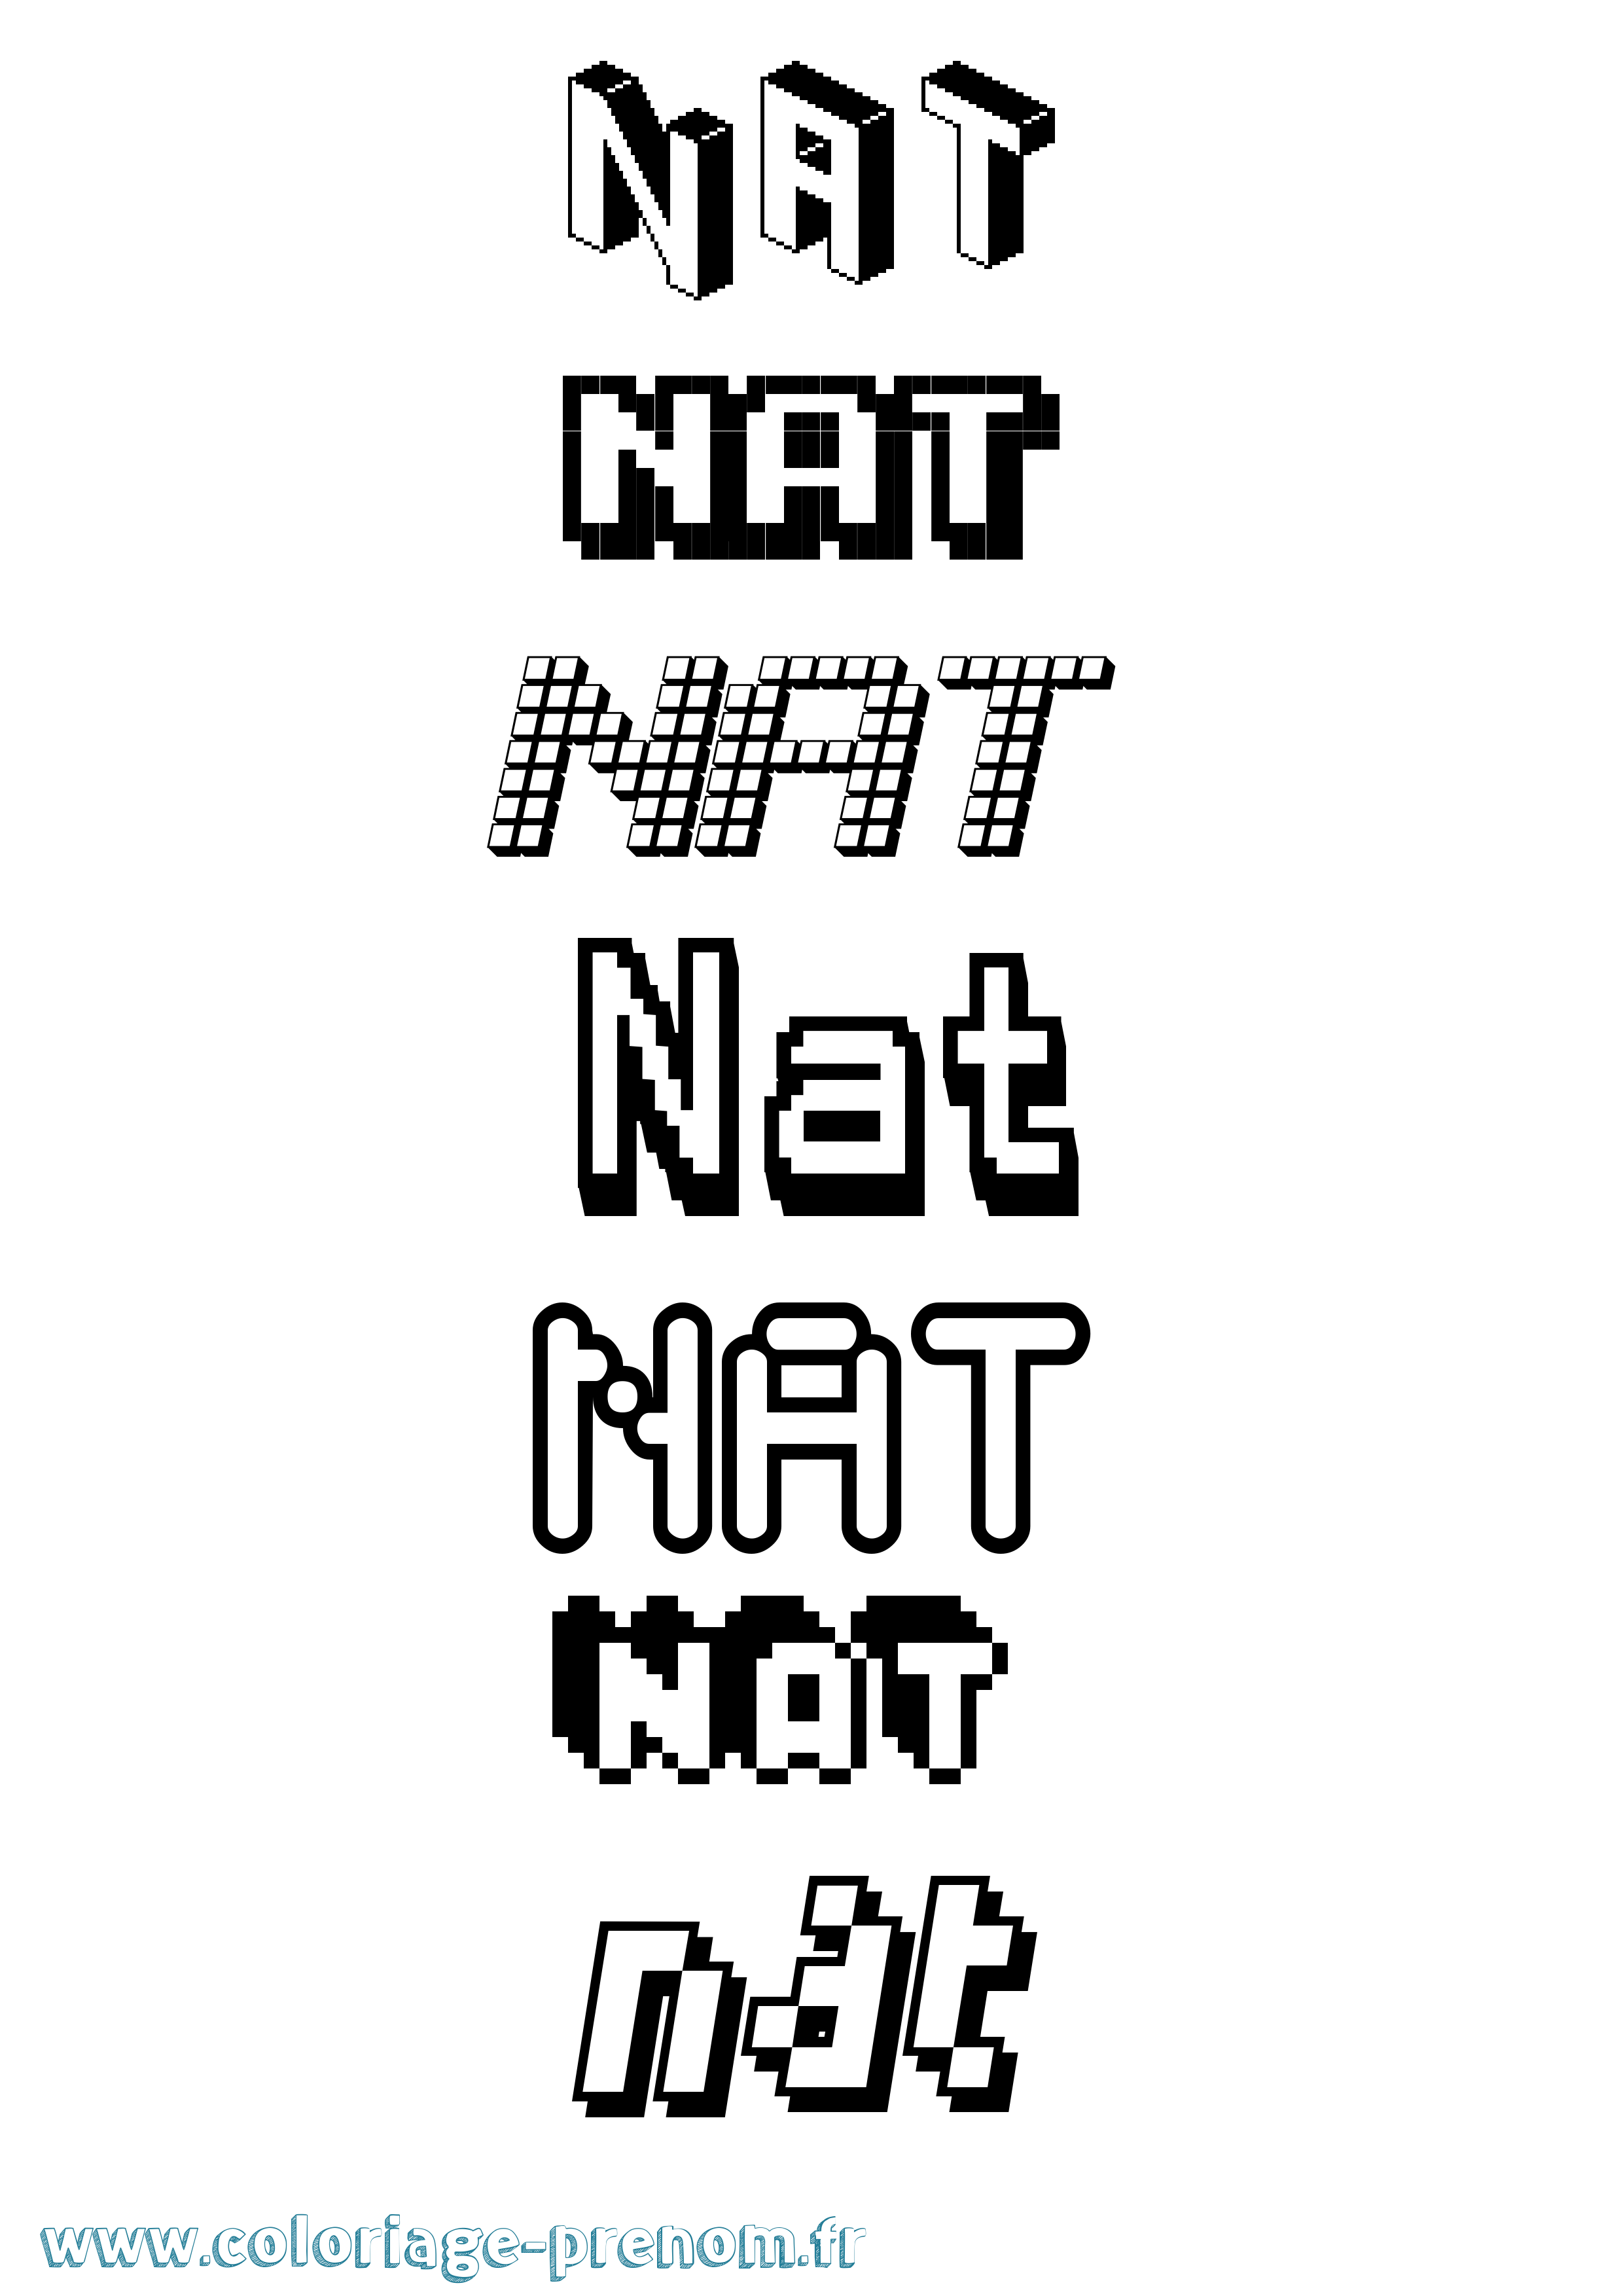 Coloriage prénom Nat Pixel